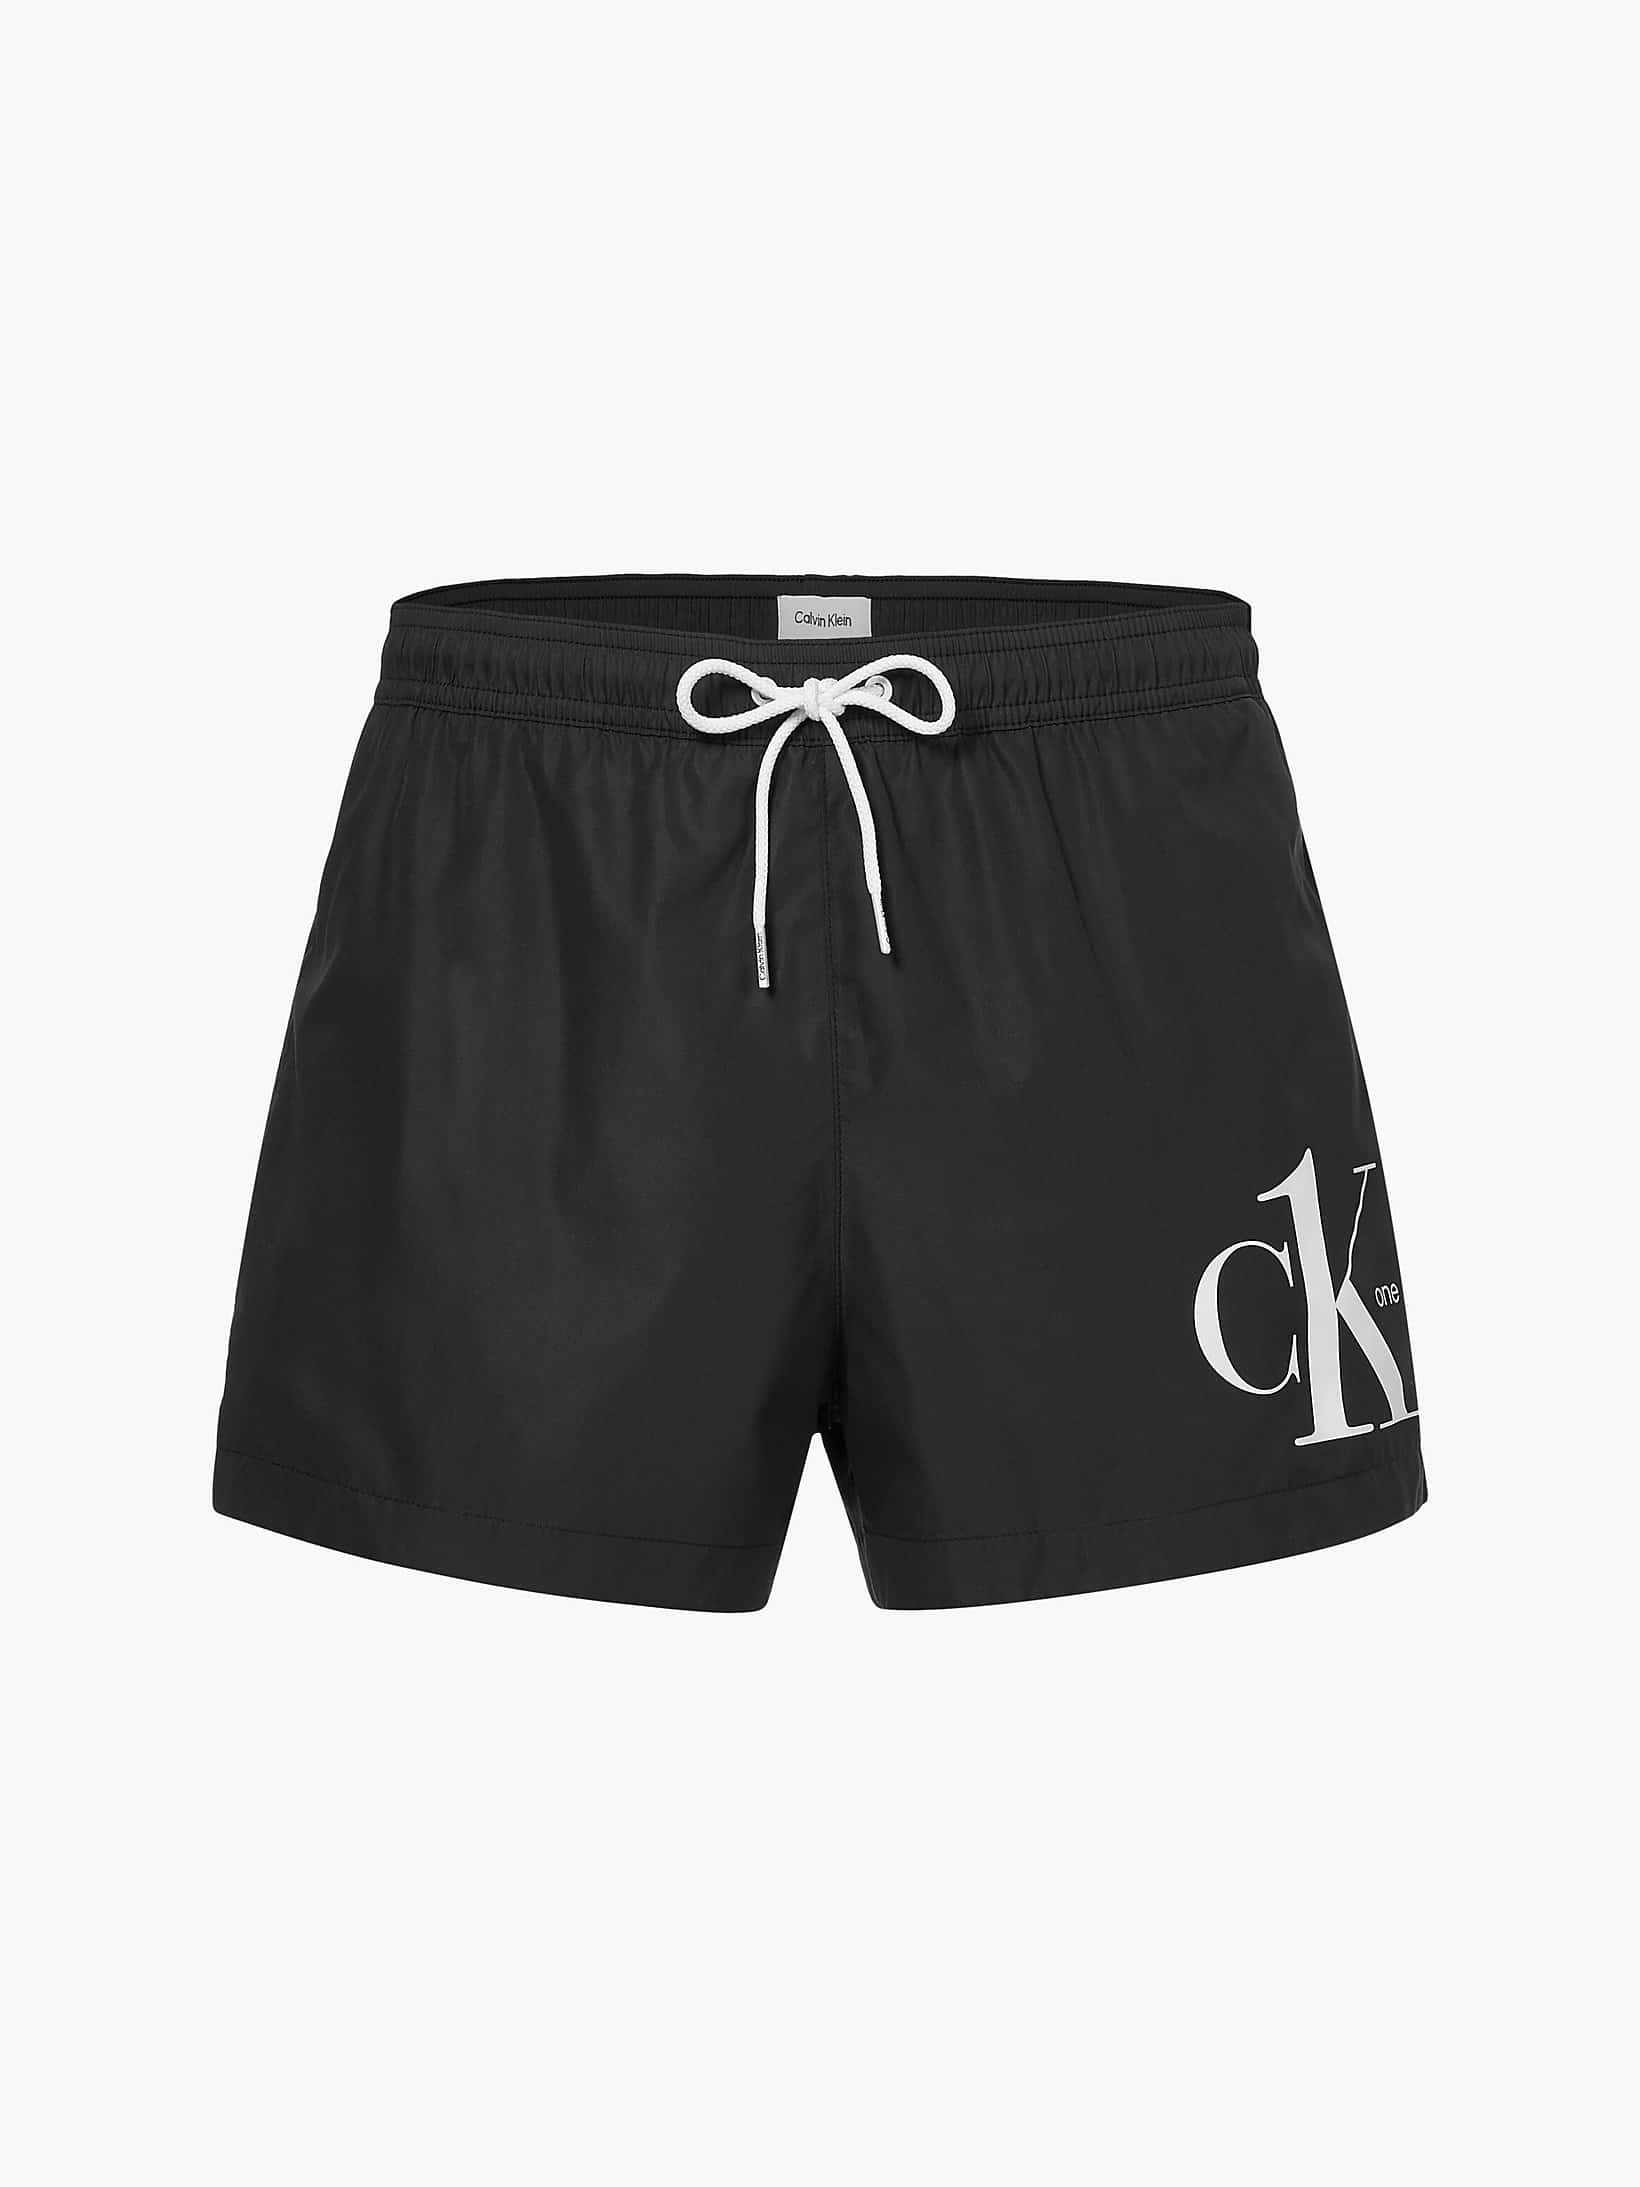 Calvin Klein Underwear Short Drawstring Zwembroeken Heren - Zwart - Maat S